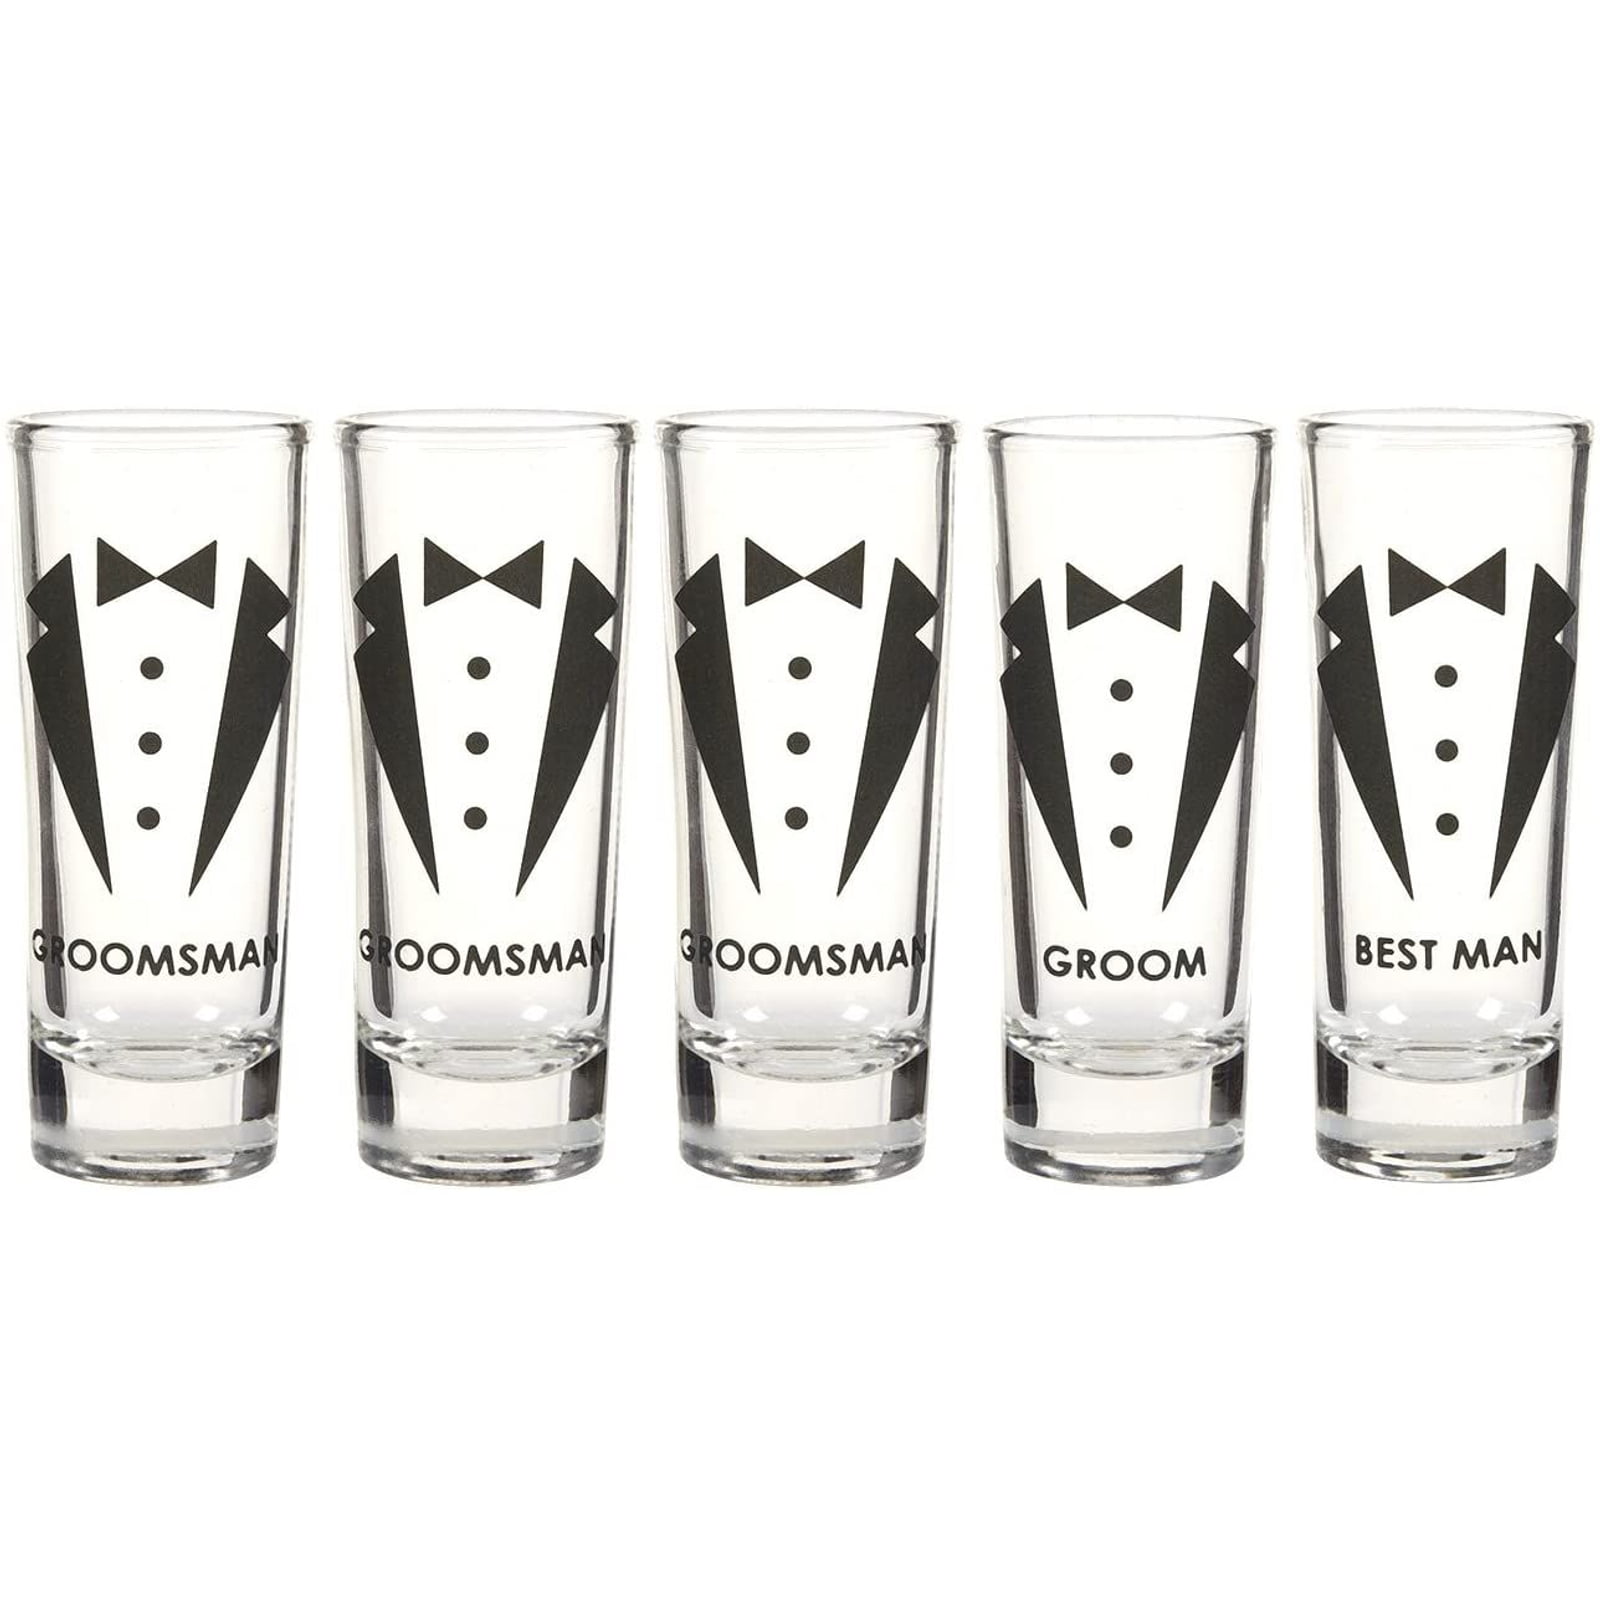 glass shot glasses Mr Wedding Shots & Mrs Shooter shot glasses for Bride and Groom